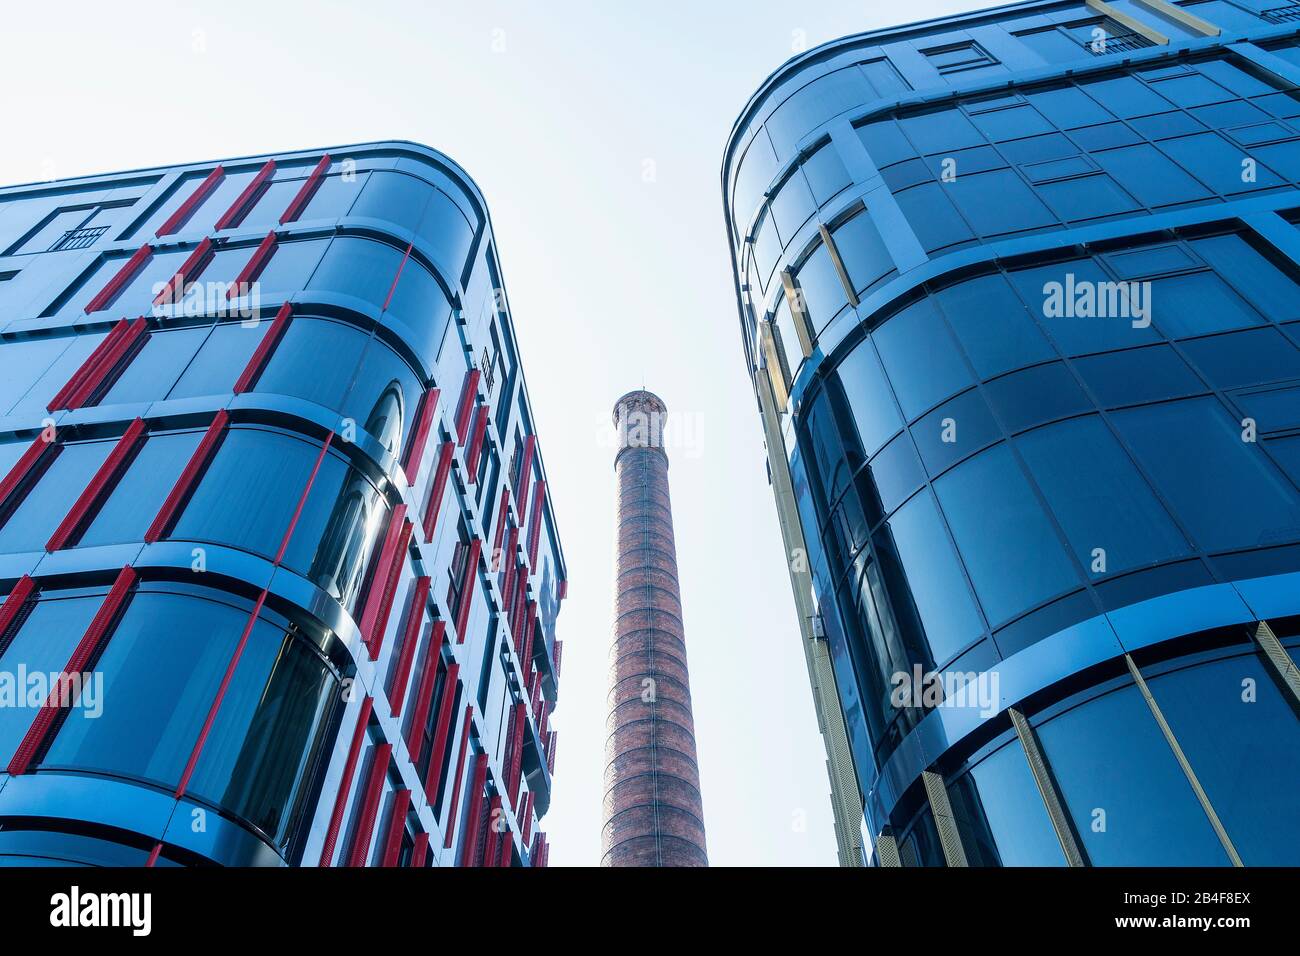 Estonia, Tallinn, Rotermann City, modern business district, glass facades Stock Photo